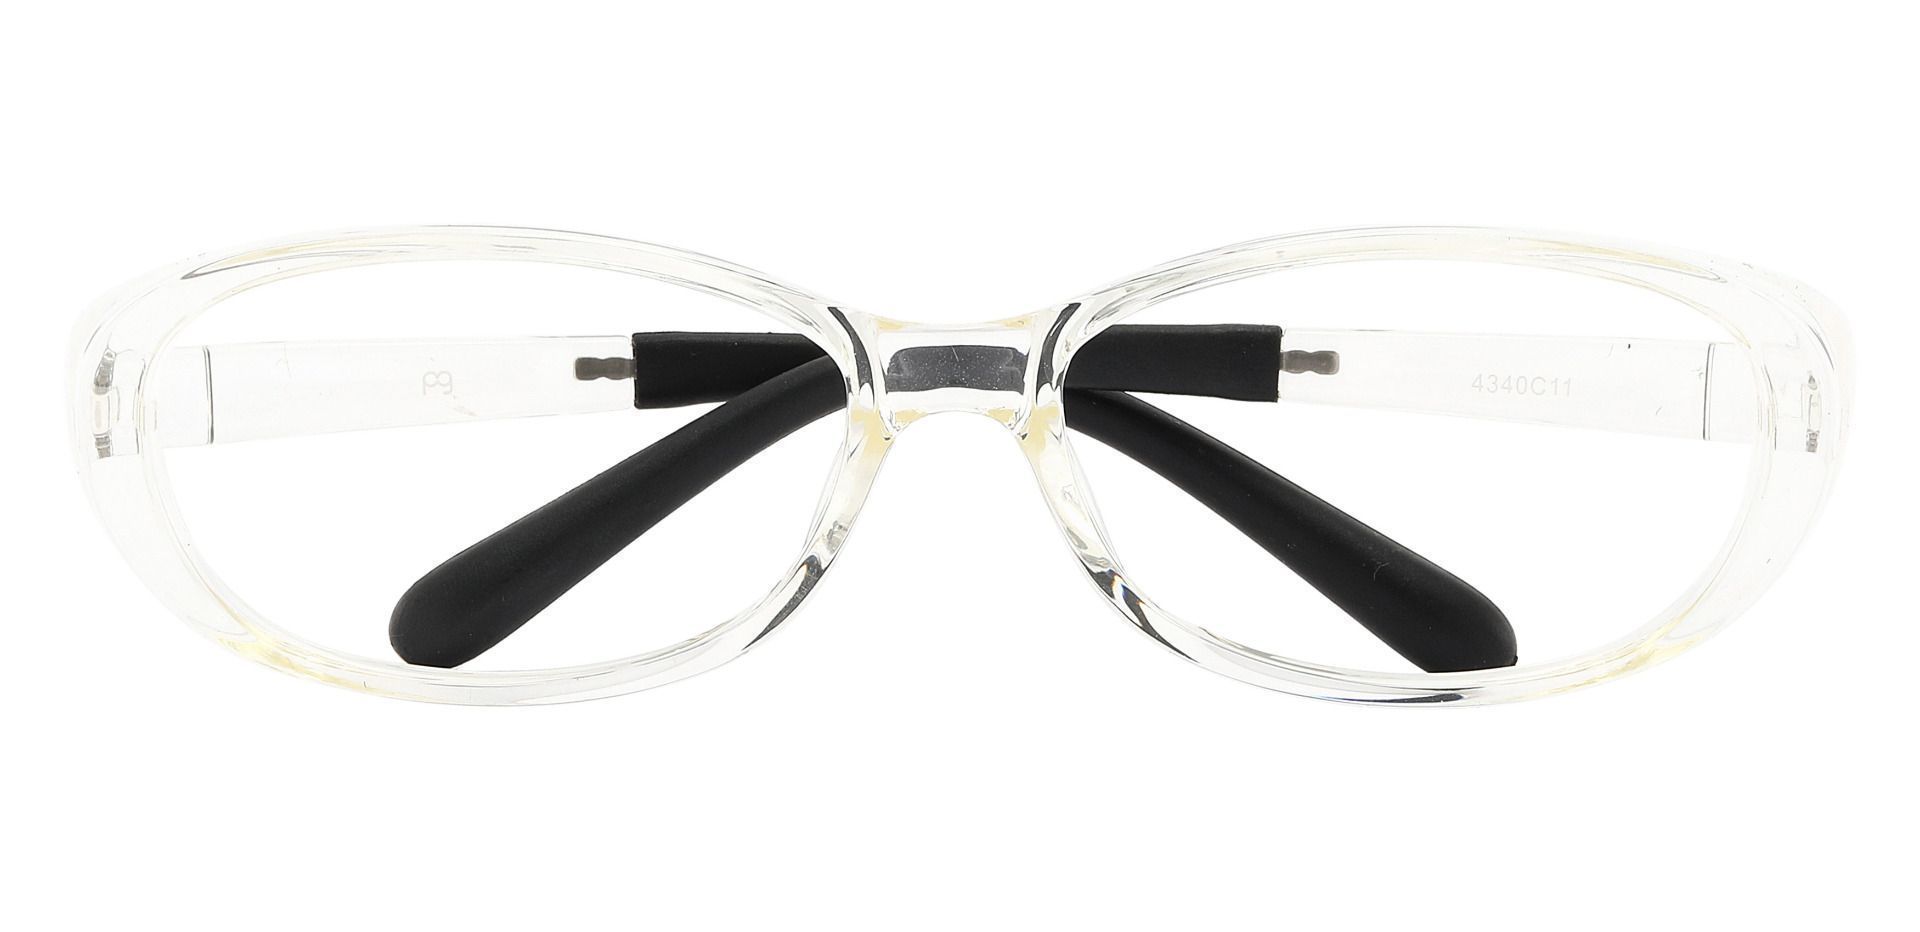 Holt Sports Goggles Prescription Glasses - Clear